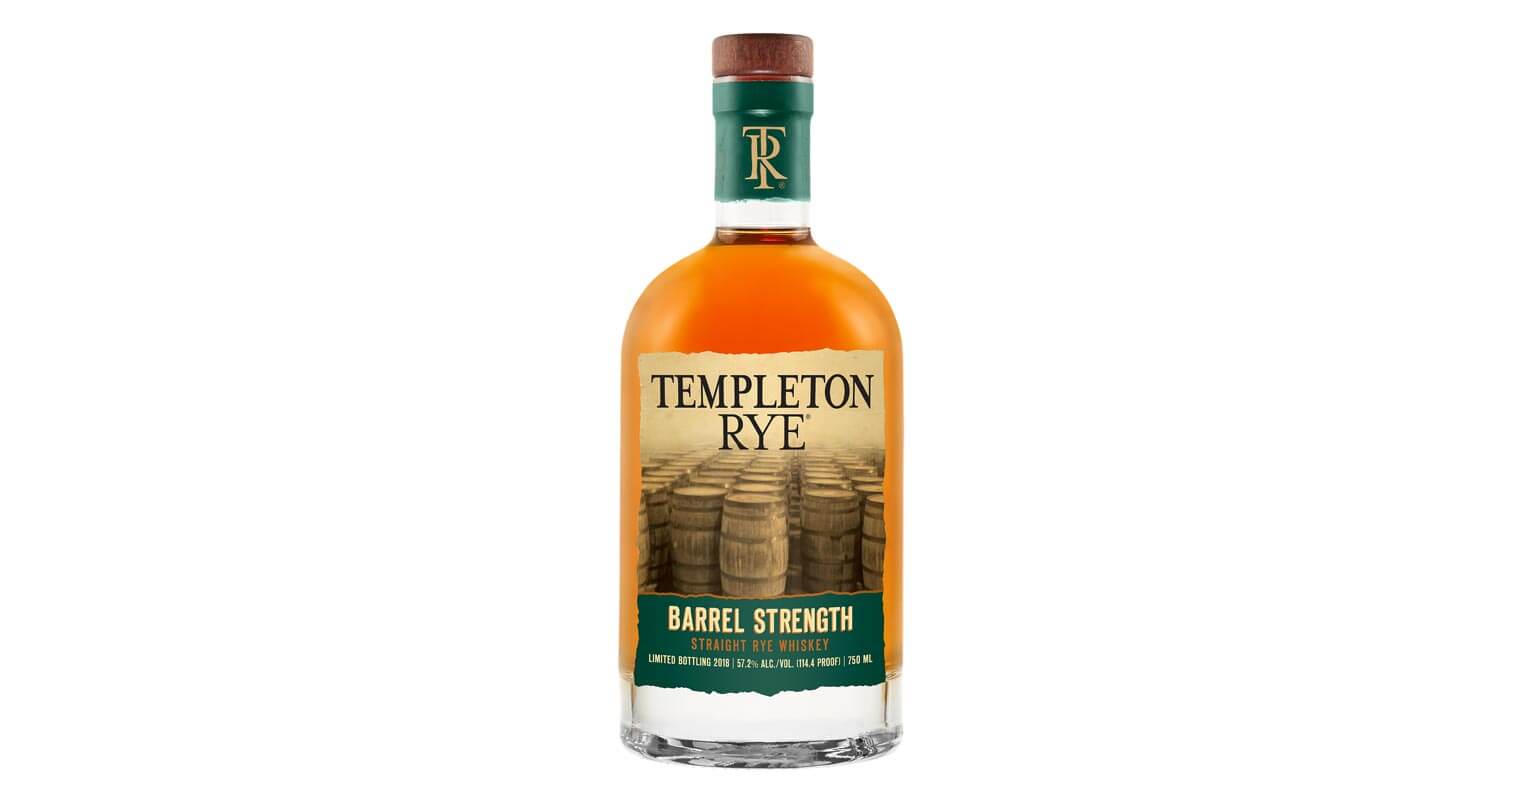 Templeton Rye Barrel Strength Straight Rye Whiskey, bottle on white, featured image